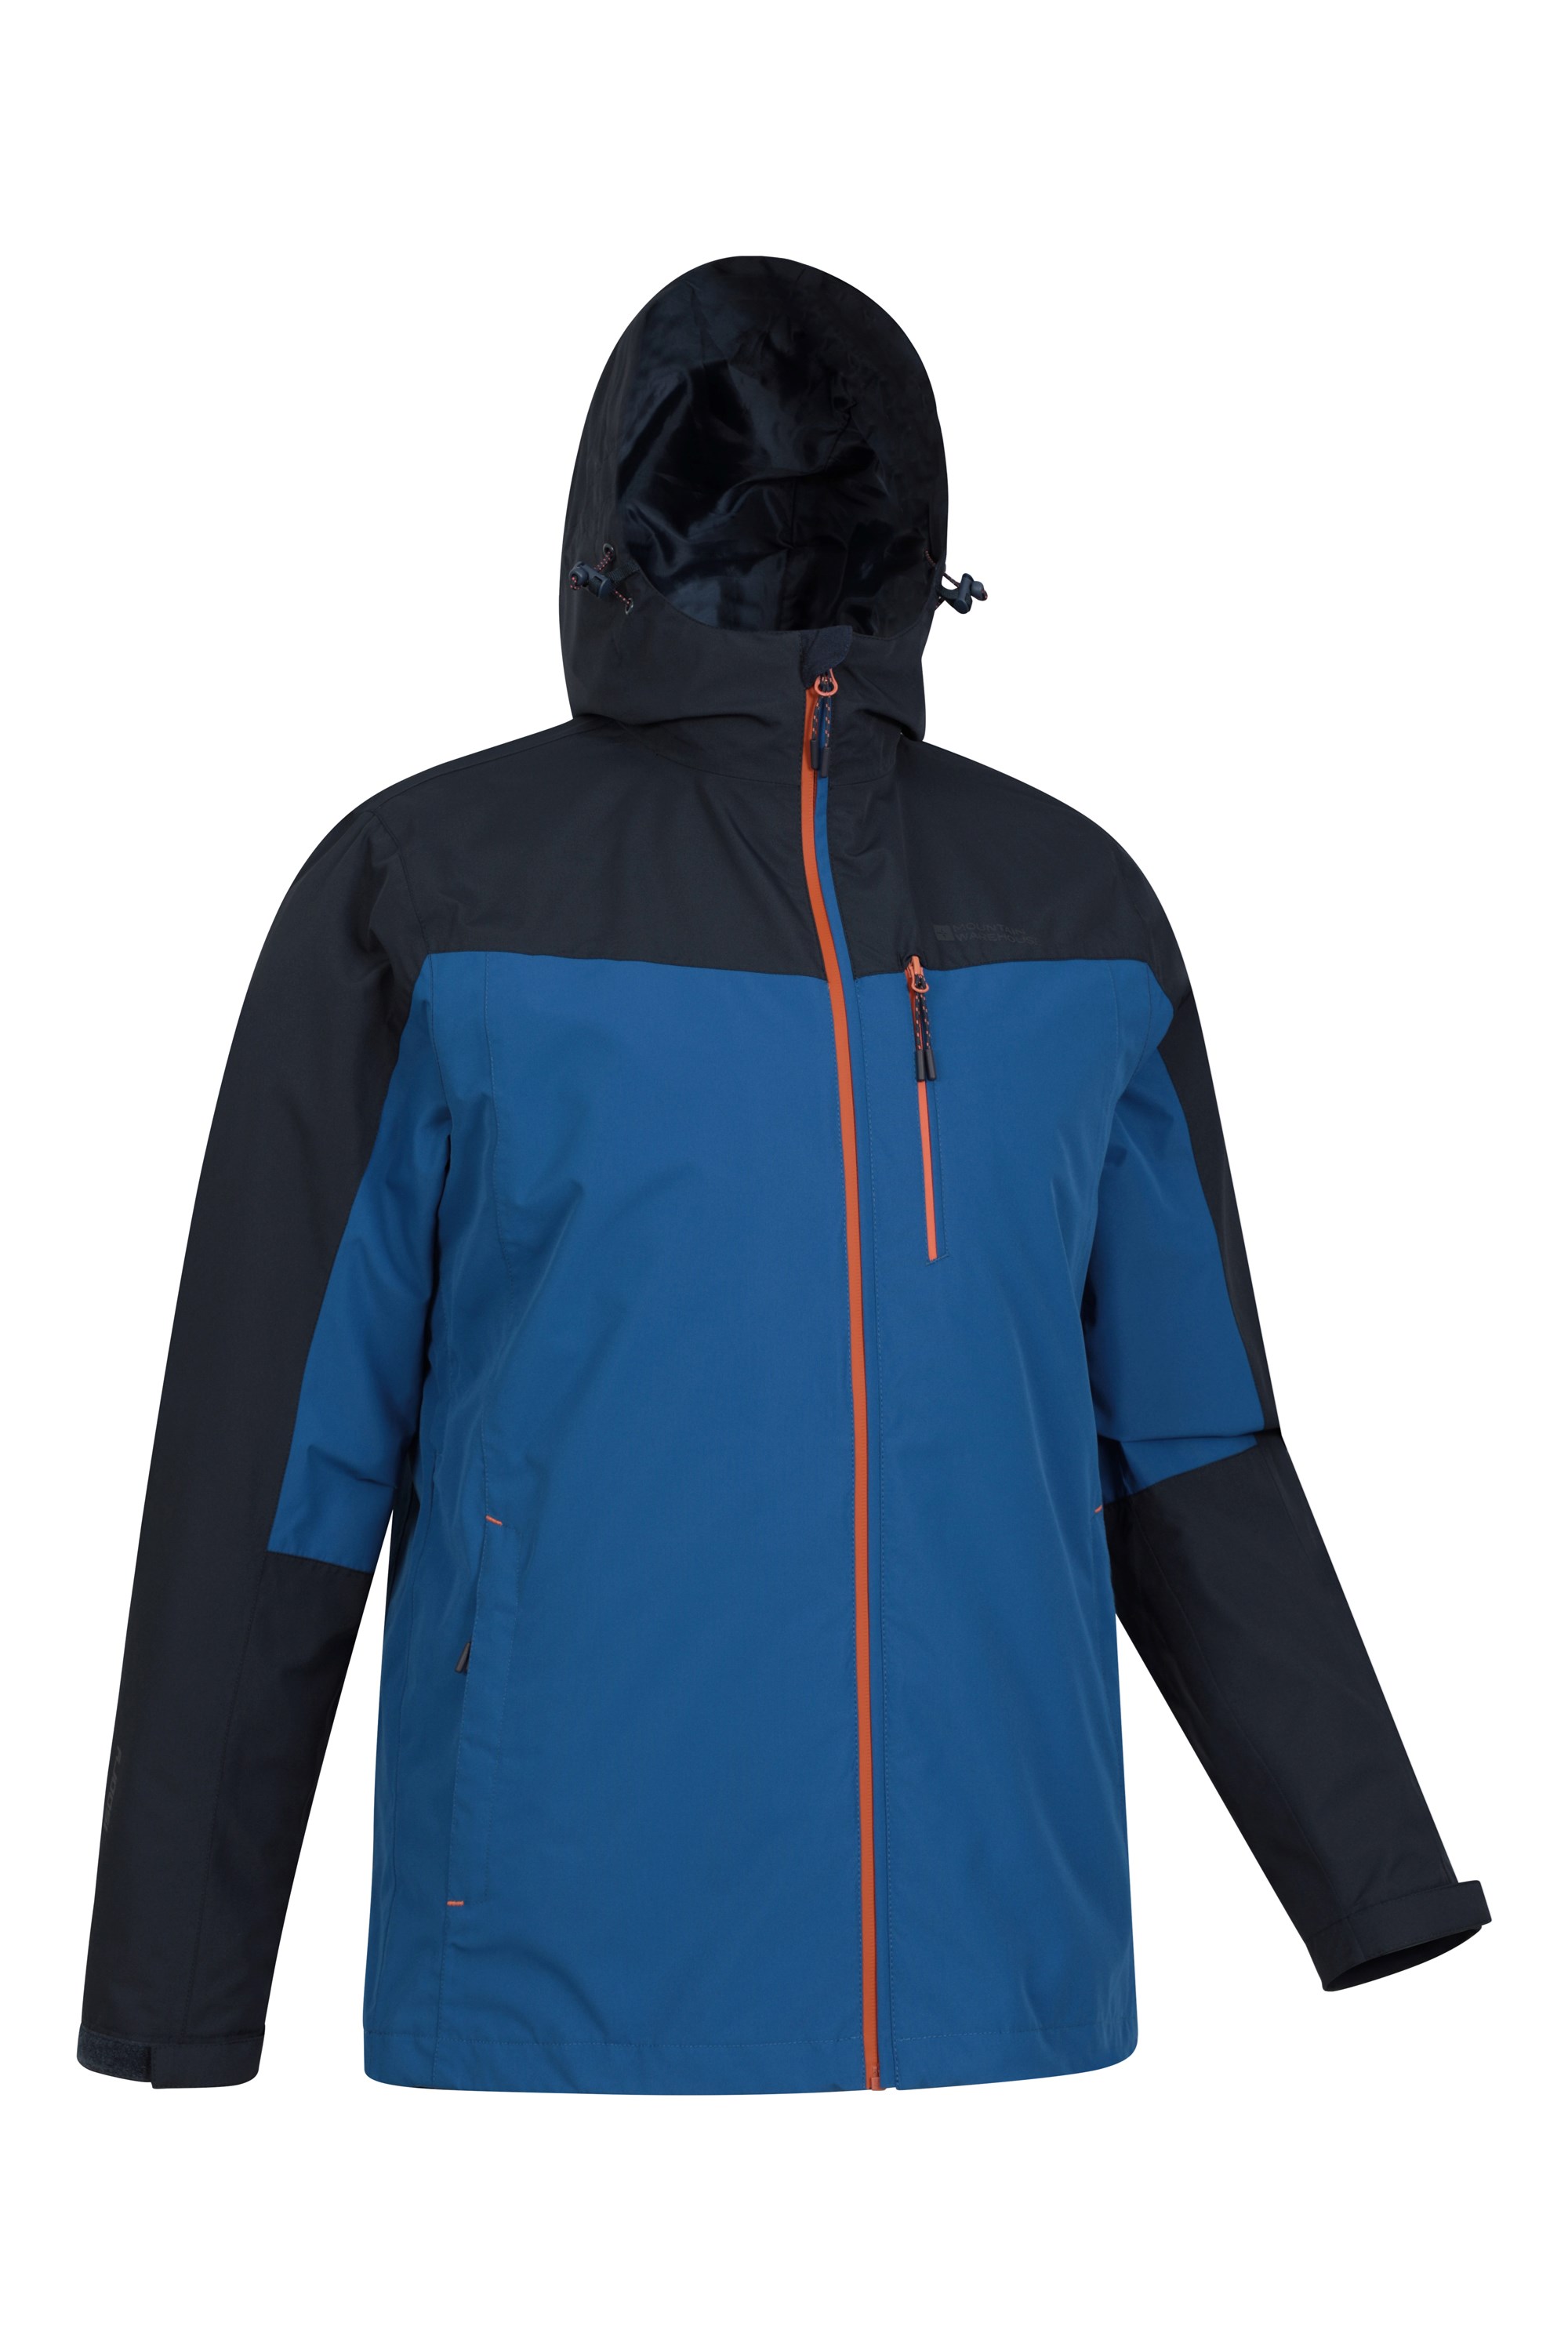 Extreme Mountain Warehouse IsoDry 10000 Waterproof Breathable Jacket Size 10